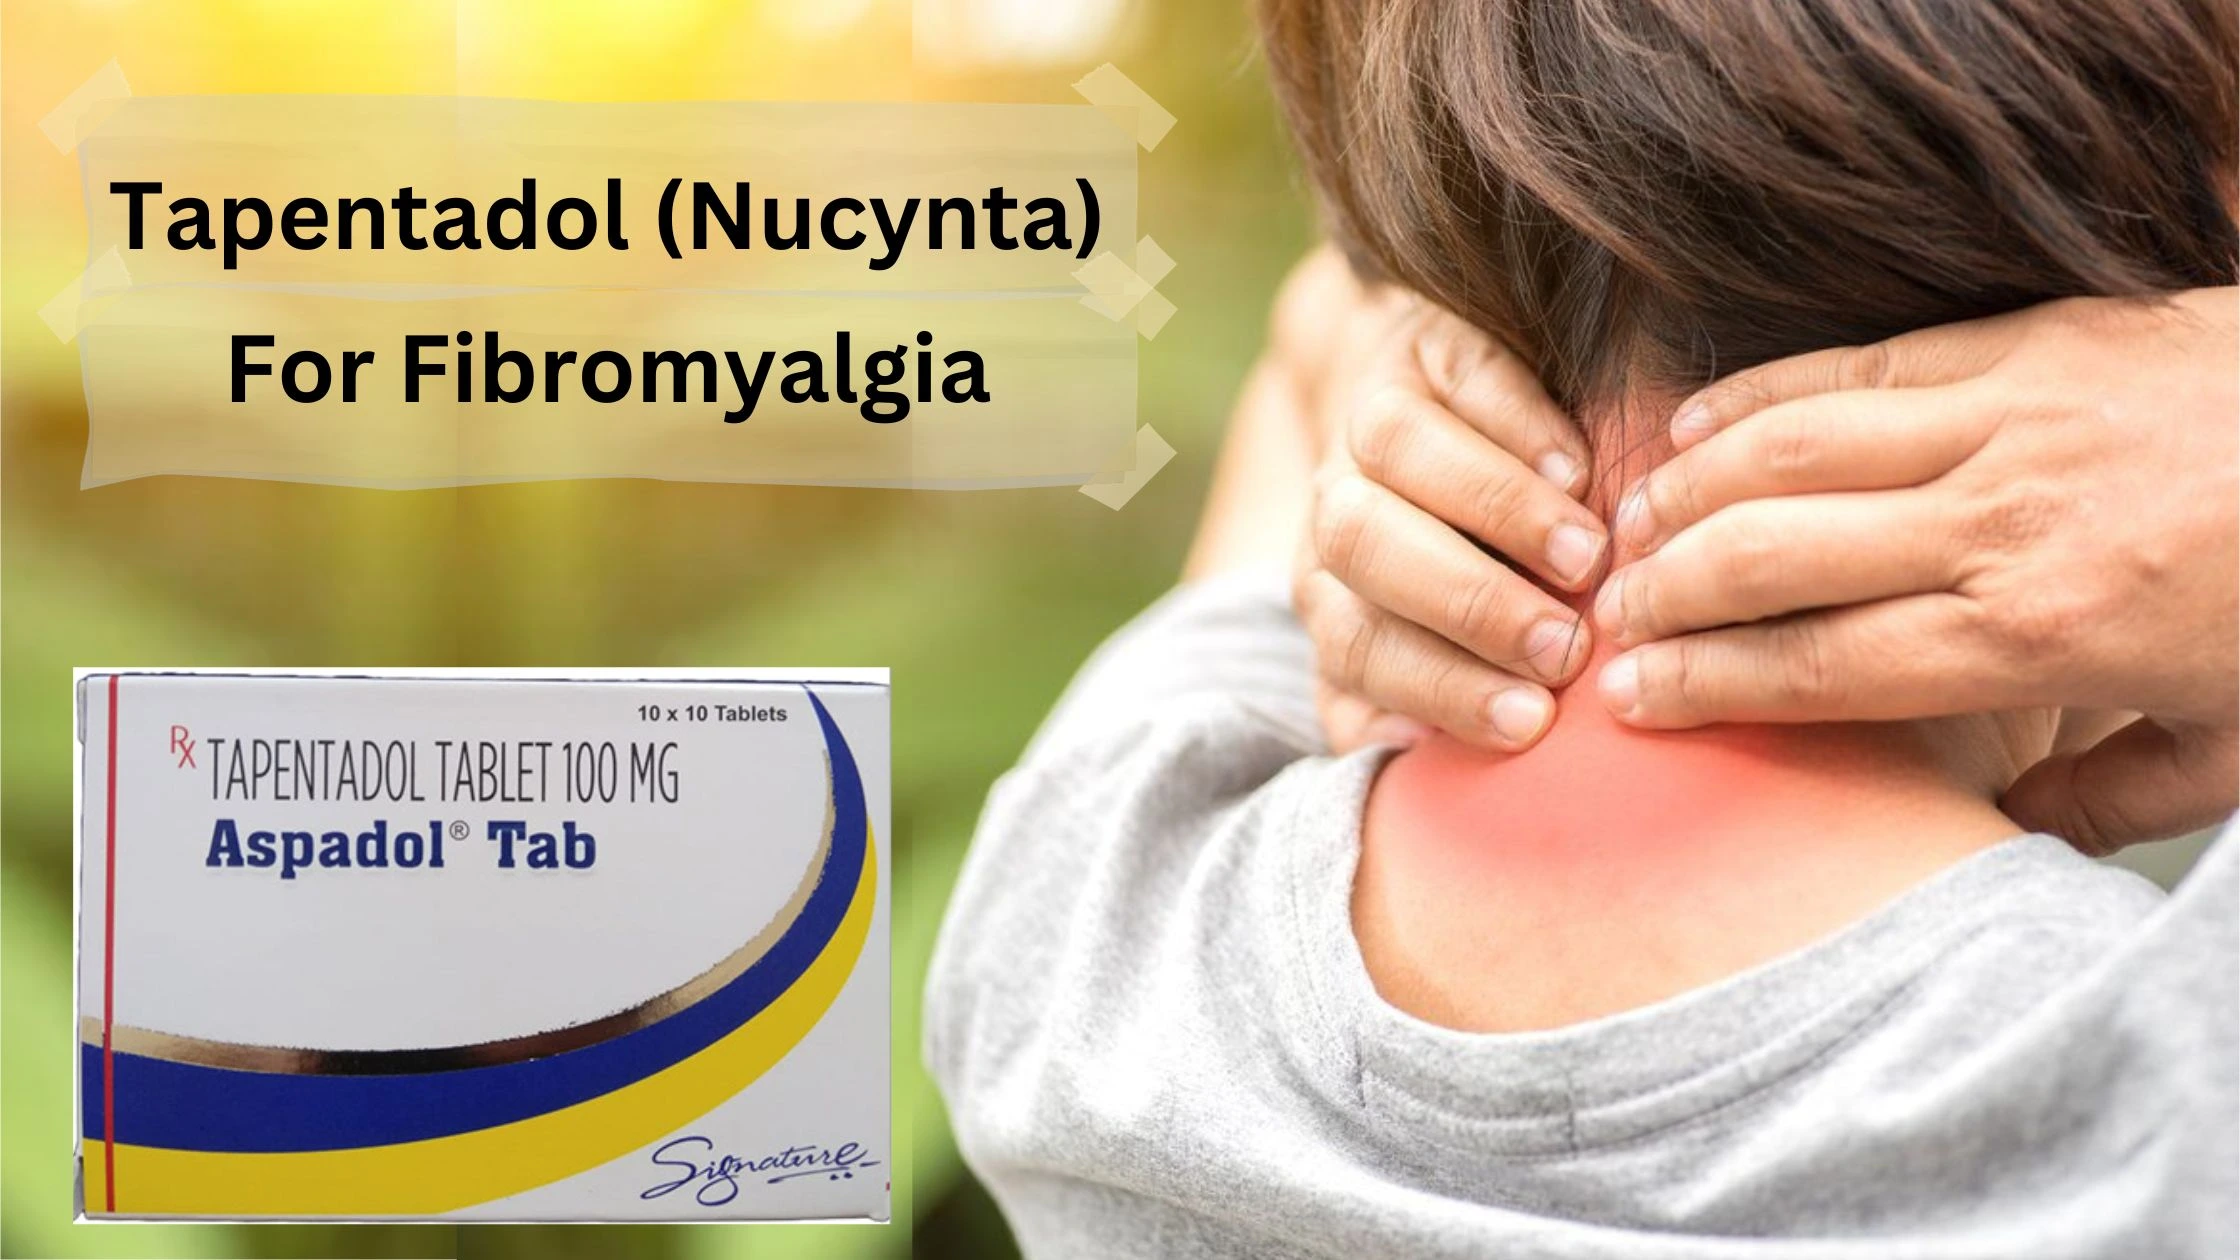 Tapentadol (Nucynta) For Fibromyalgia- Is It An Effective Treatment Option?